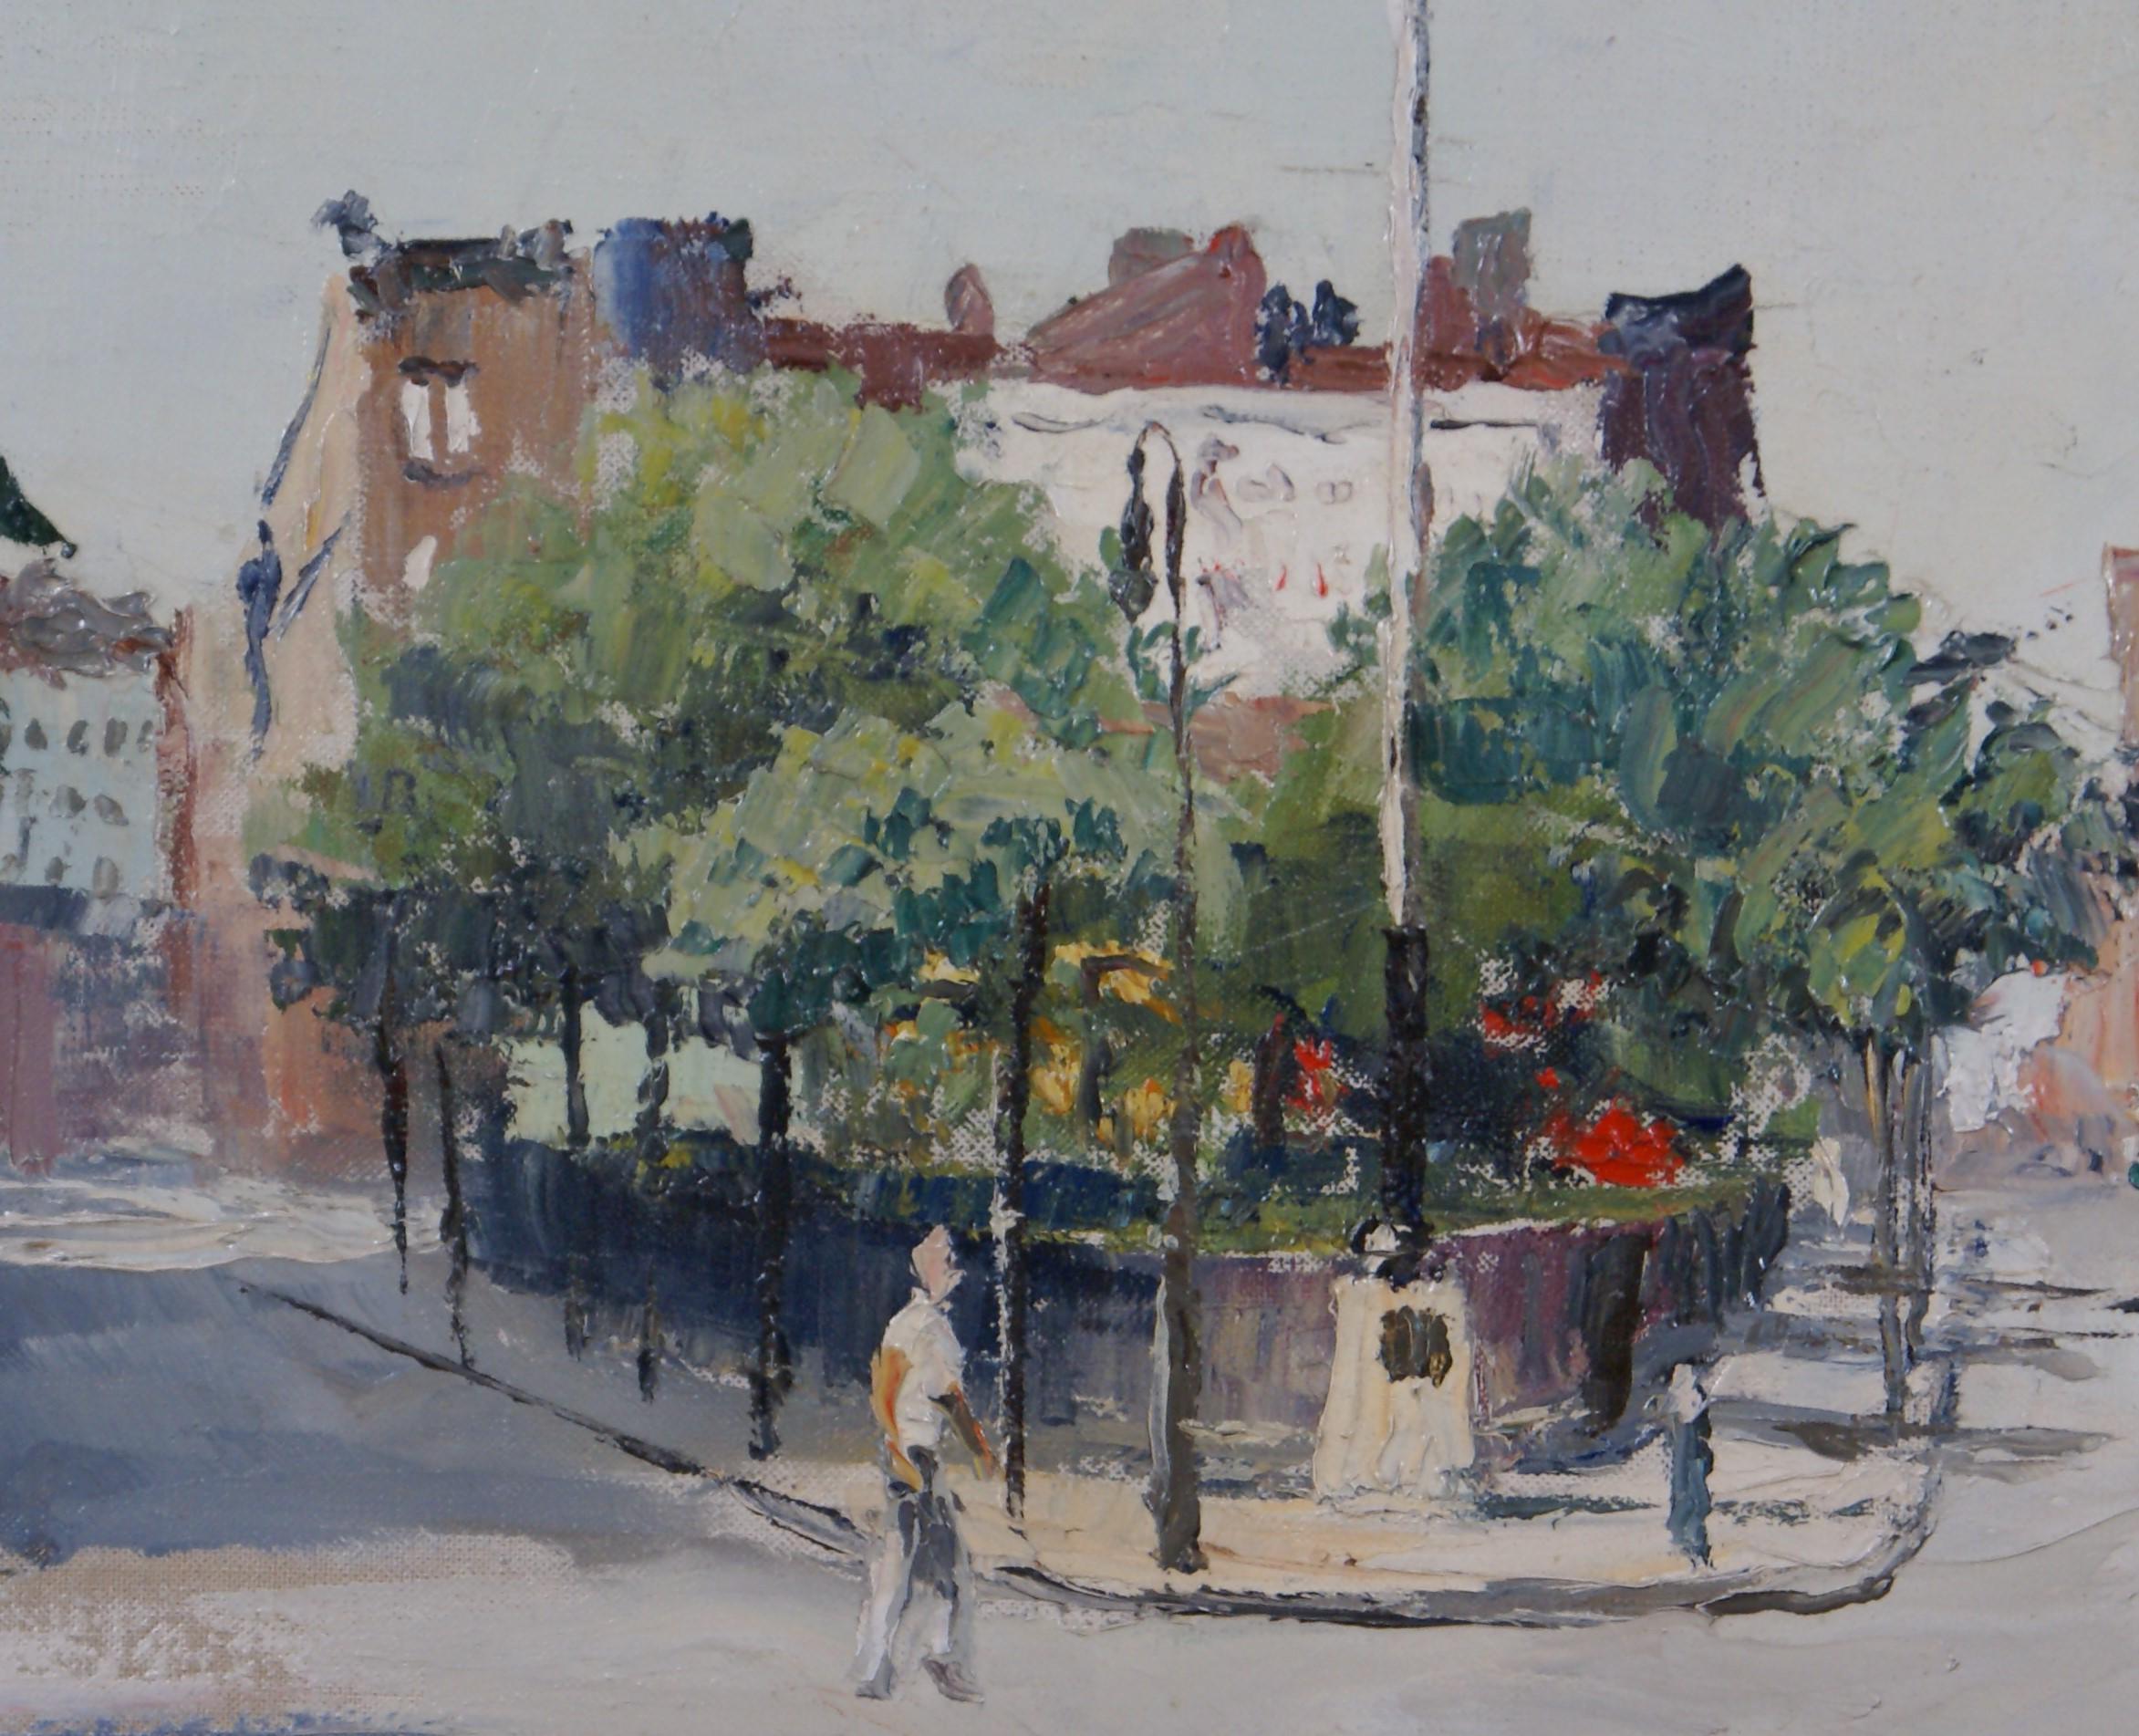 Sheridan Square - Painting by Peter Hayward